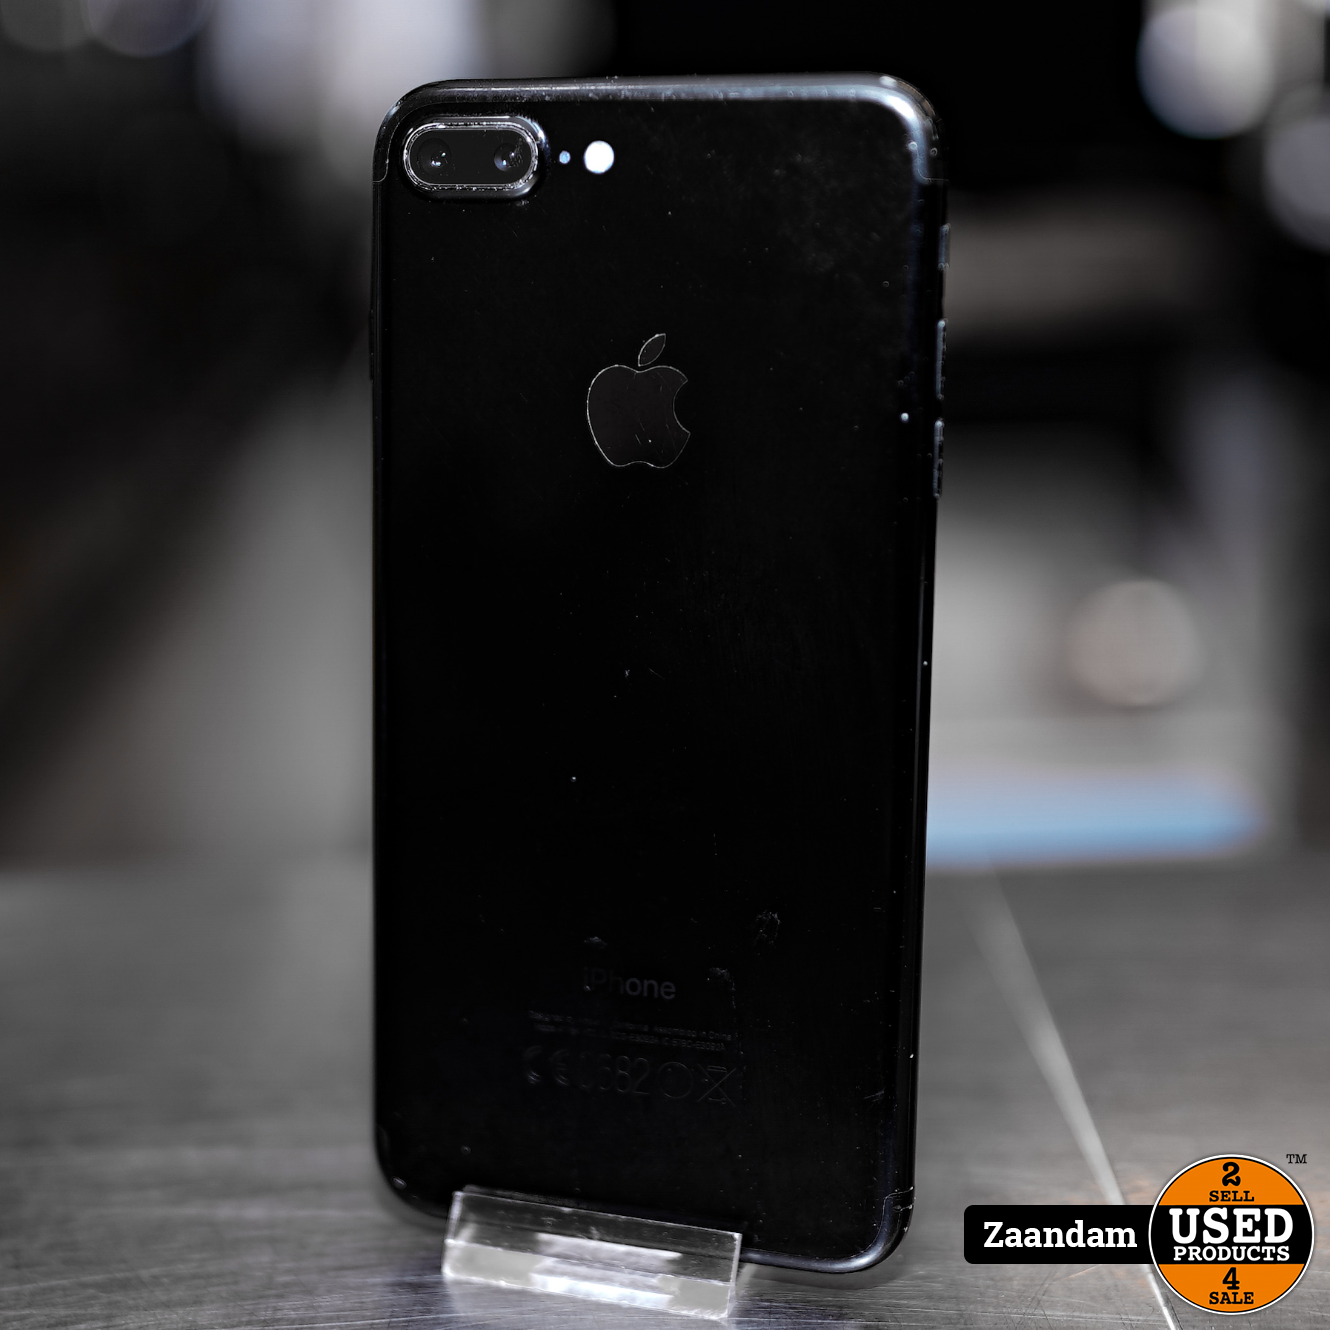 mechanisme Lam Gemengd iPhone 7 Plus 128GB Zwart | Incl. garantie - Used Products Zaandam